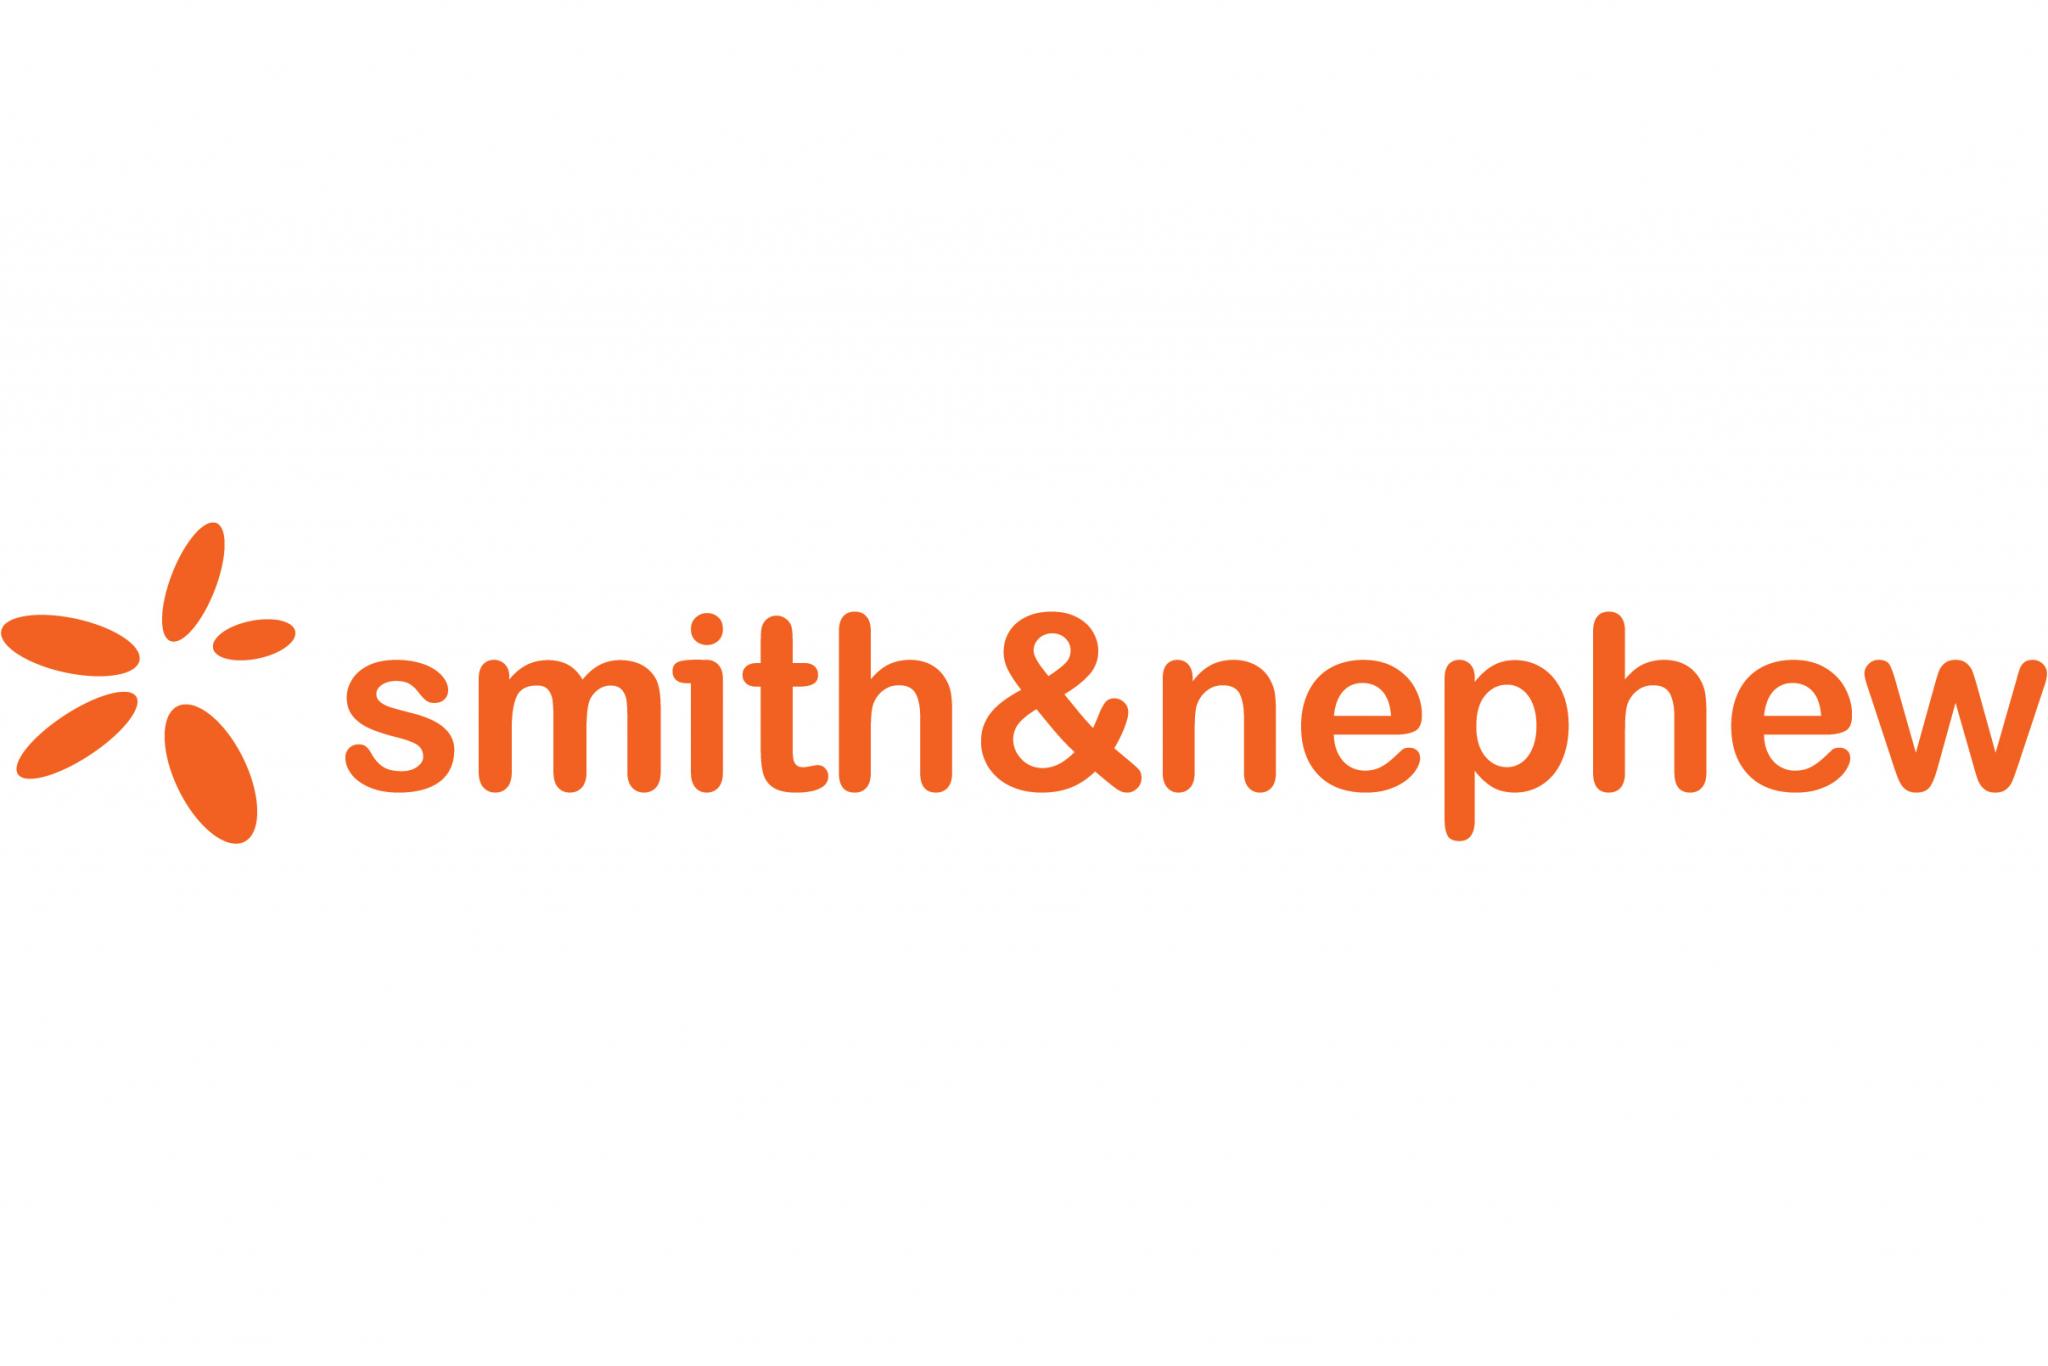 Smith & Nephew names new chairman, posts Q3 profit slip